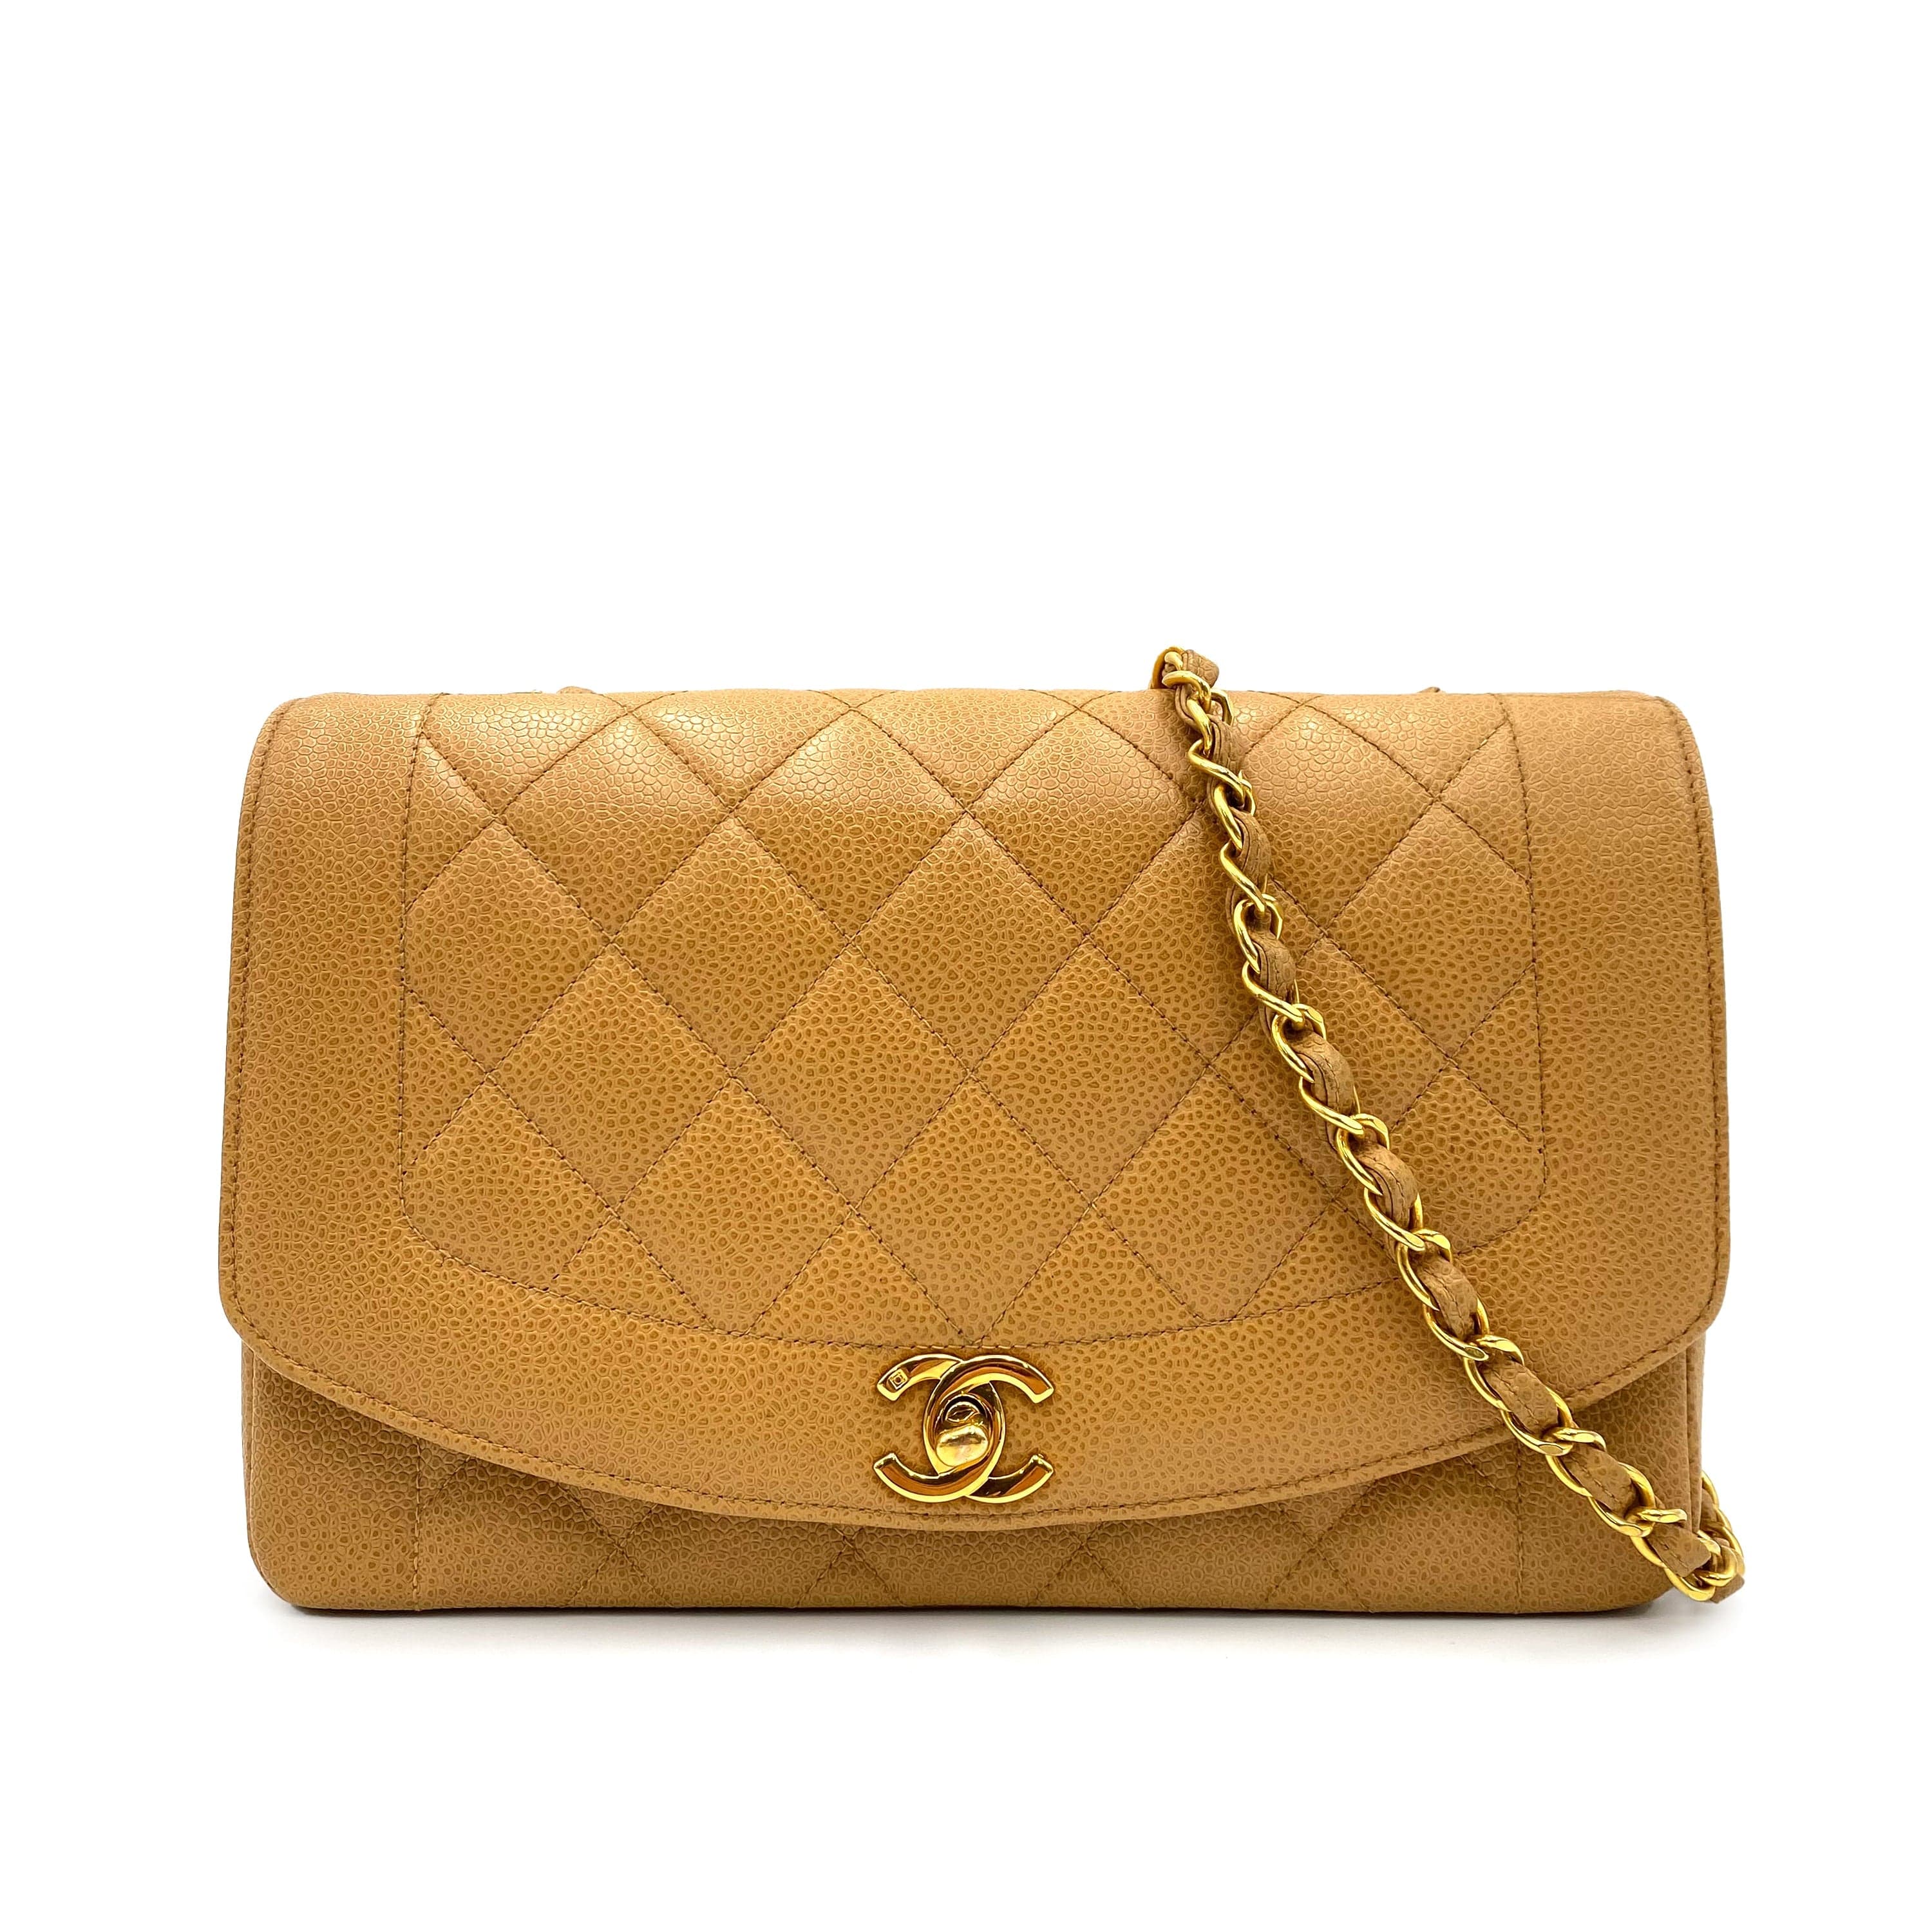 Chanel CHANEL VINTAGE DIANA MEDIUM CHAIN SHOULDER BAG BEIGE CAVIAR SKIN 90229337